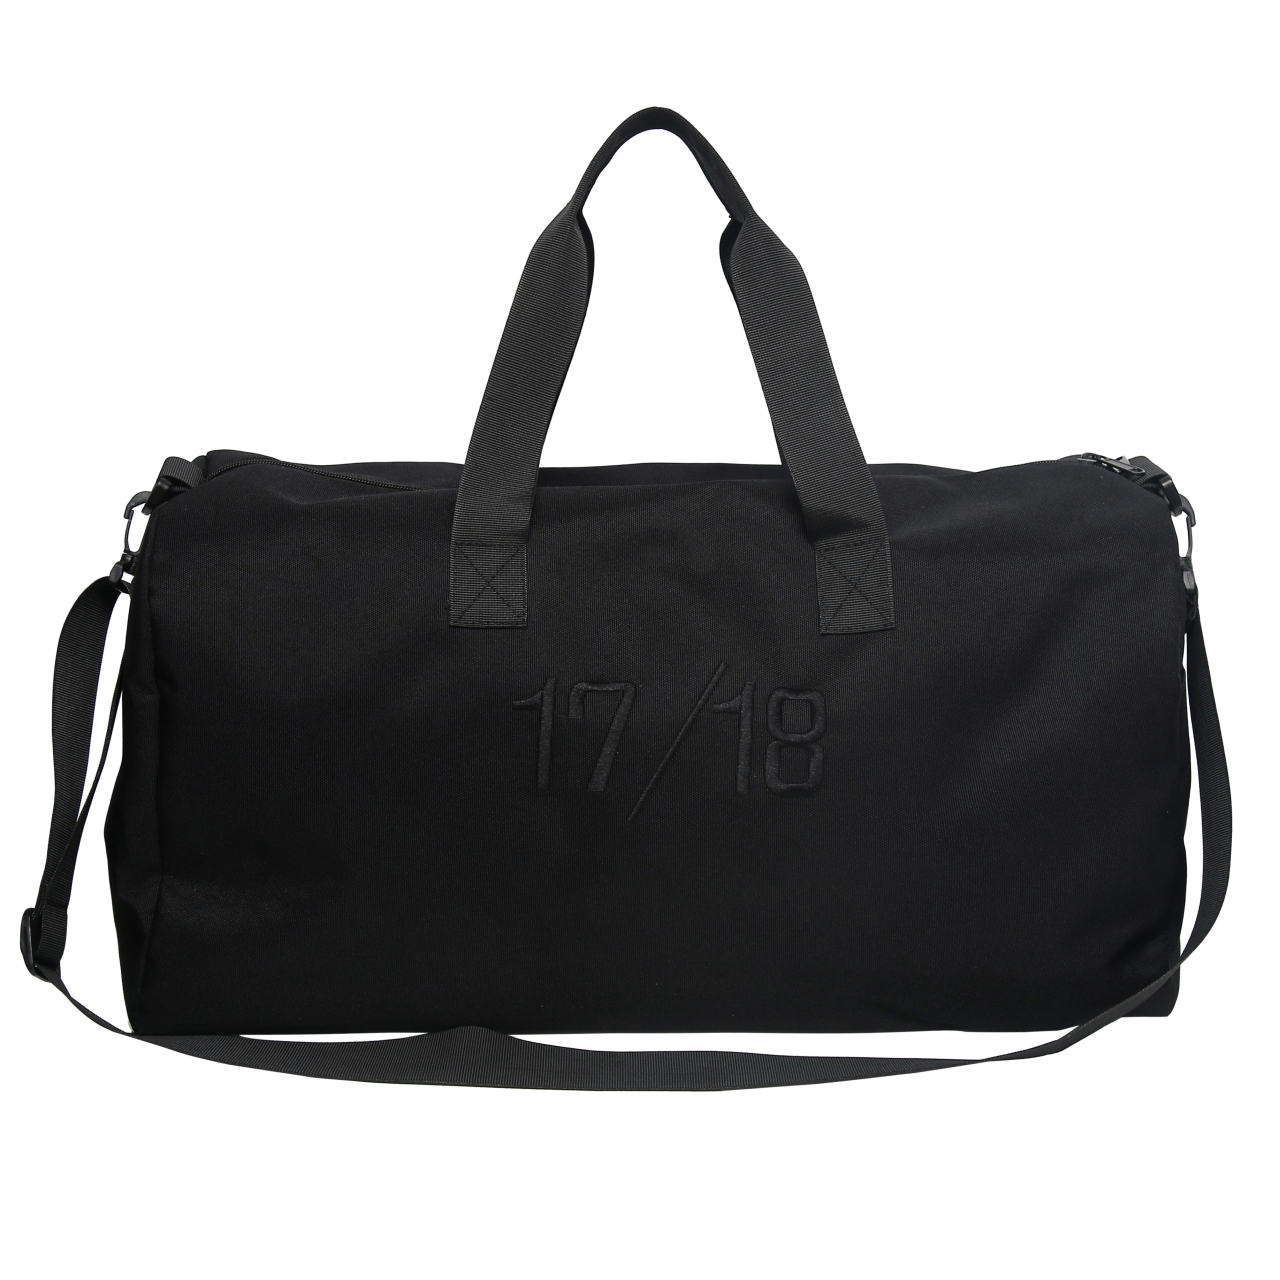 Marksman High Quality Fitness Bag Waterproof Travel Bag High Capacity Sports Luggage Bag